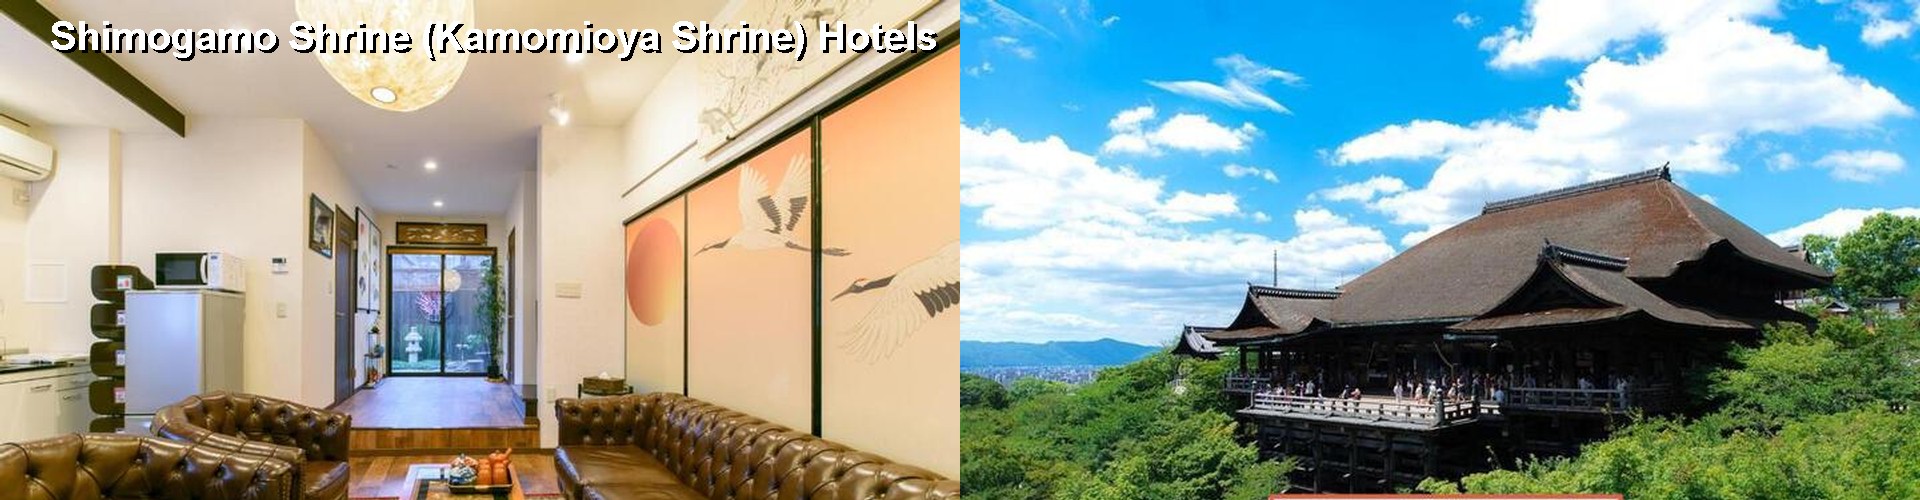 5 Best Hotels near Shimogamo Shrine (Kamomioya Shrine)